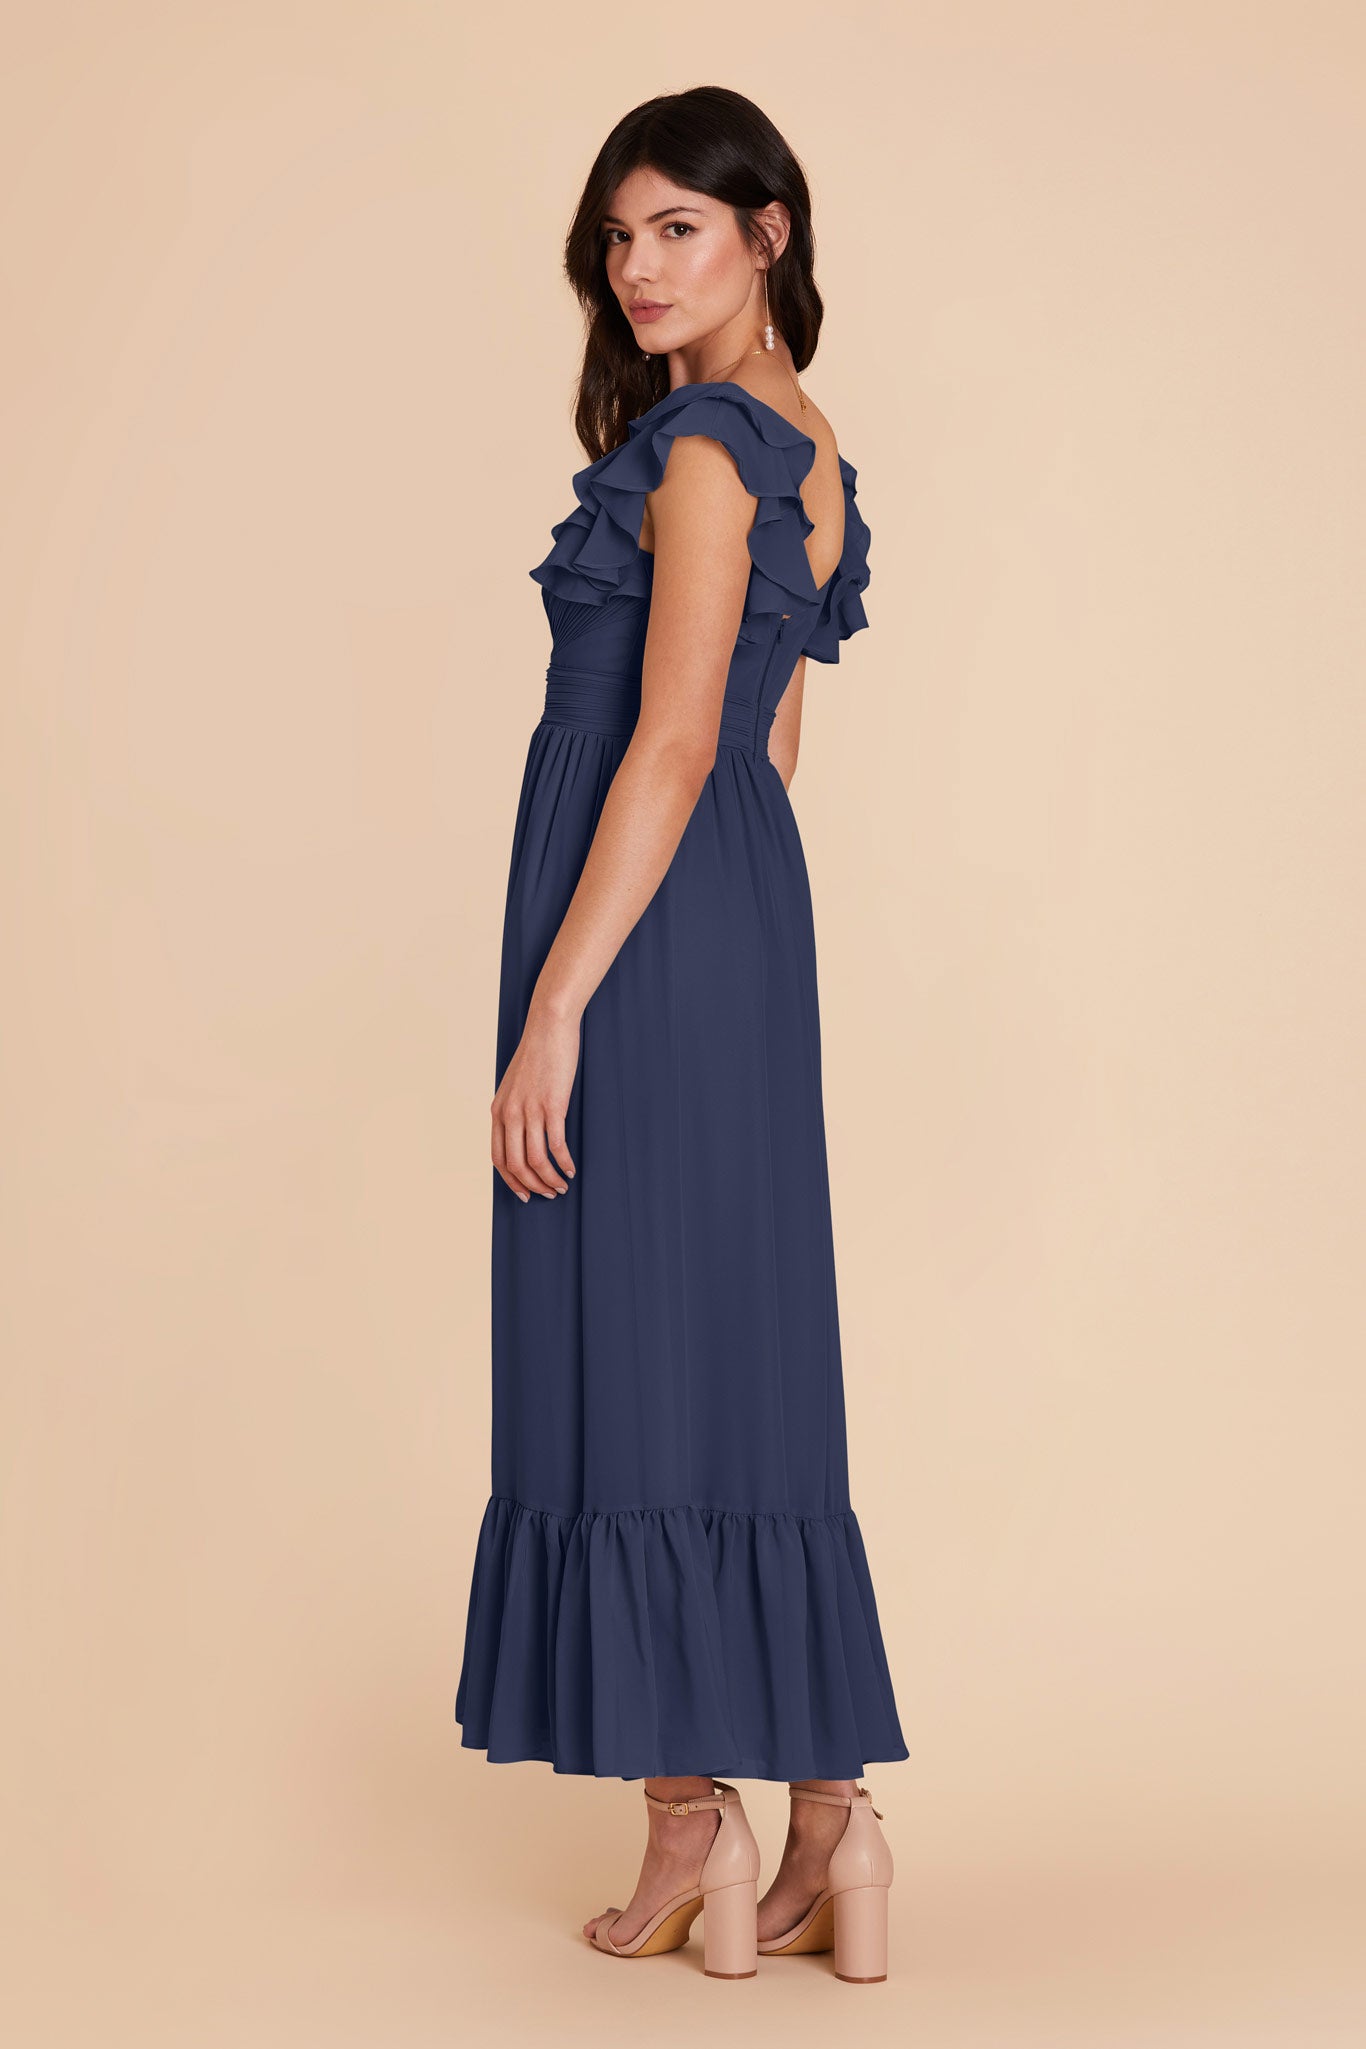 Slate Blue Michelle Chiffon Dress by Birdy Grey